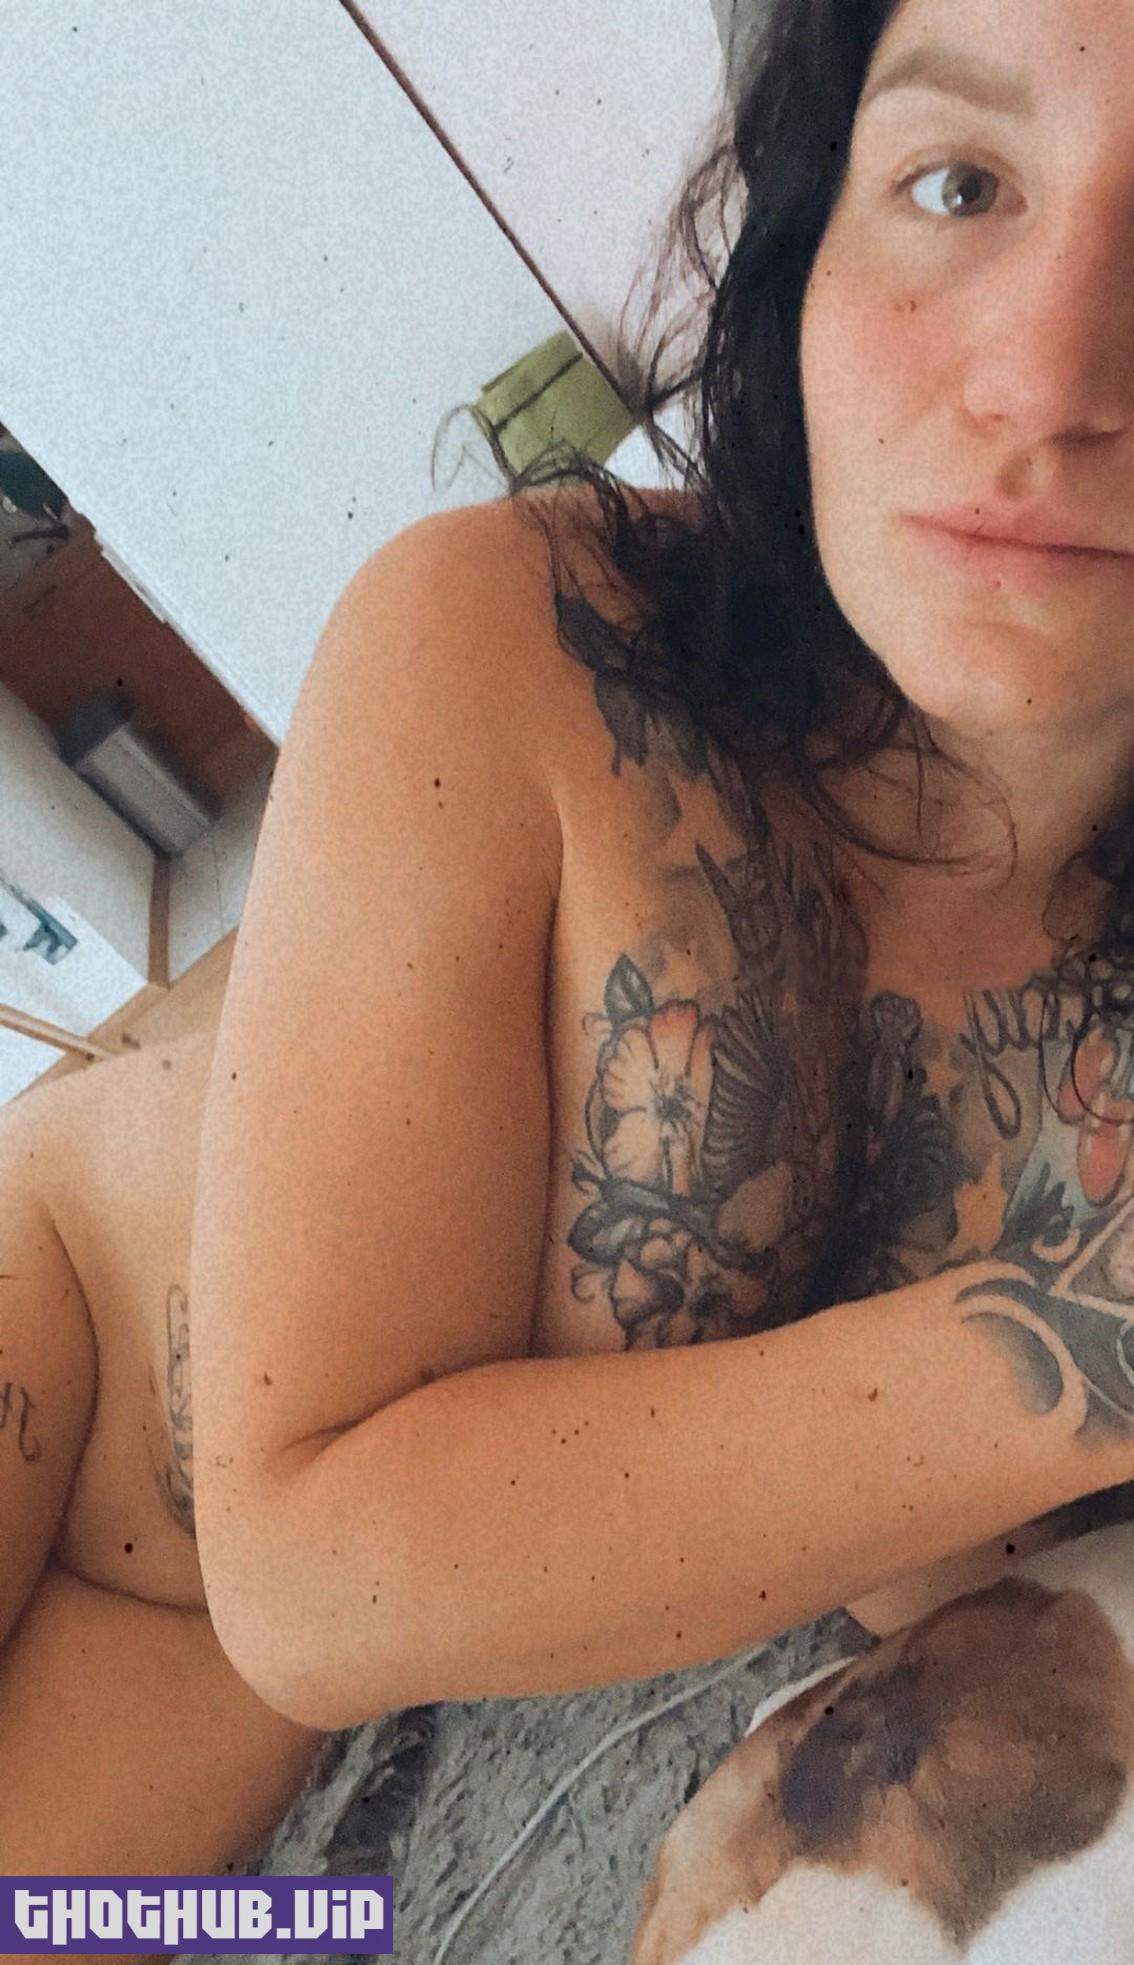 Katharina Lehner nude photos leaked The Fappening 2021